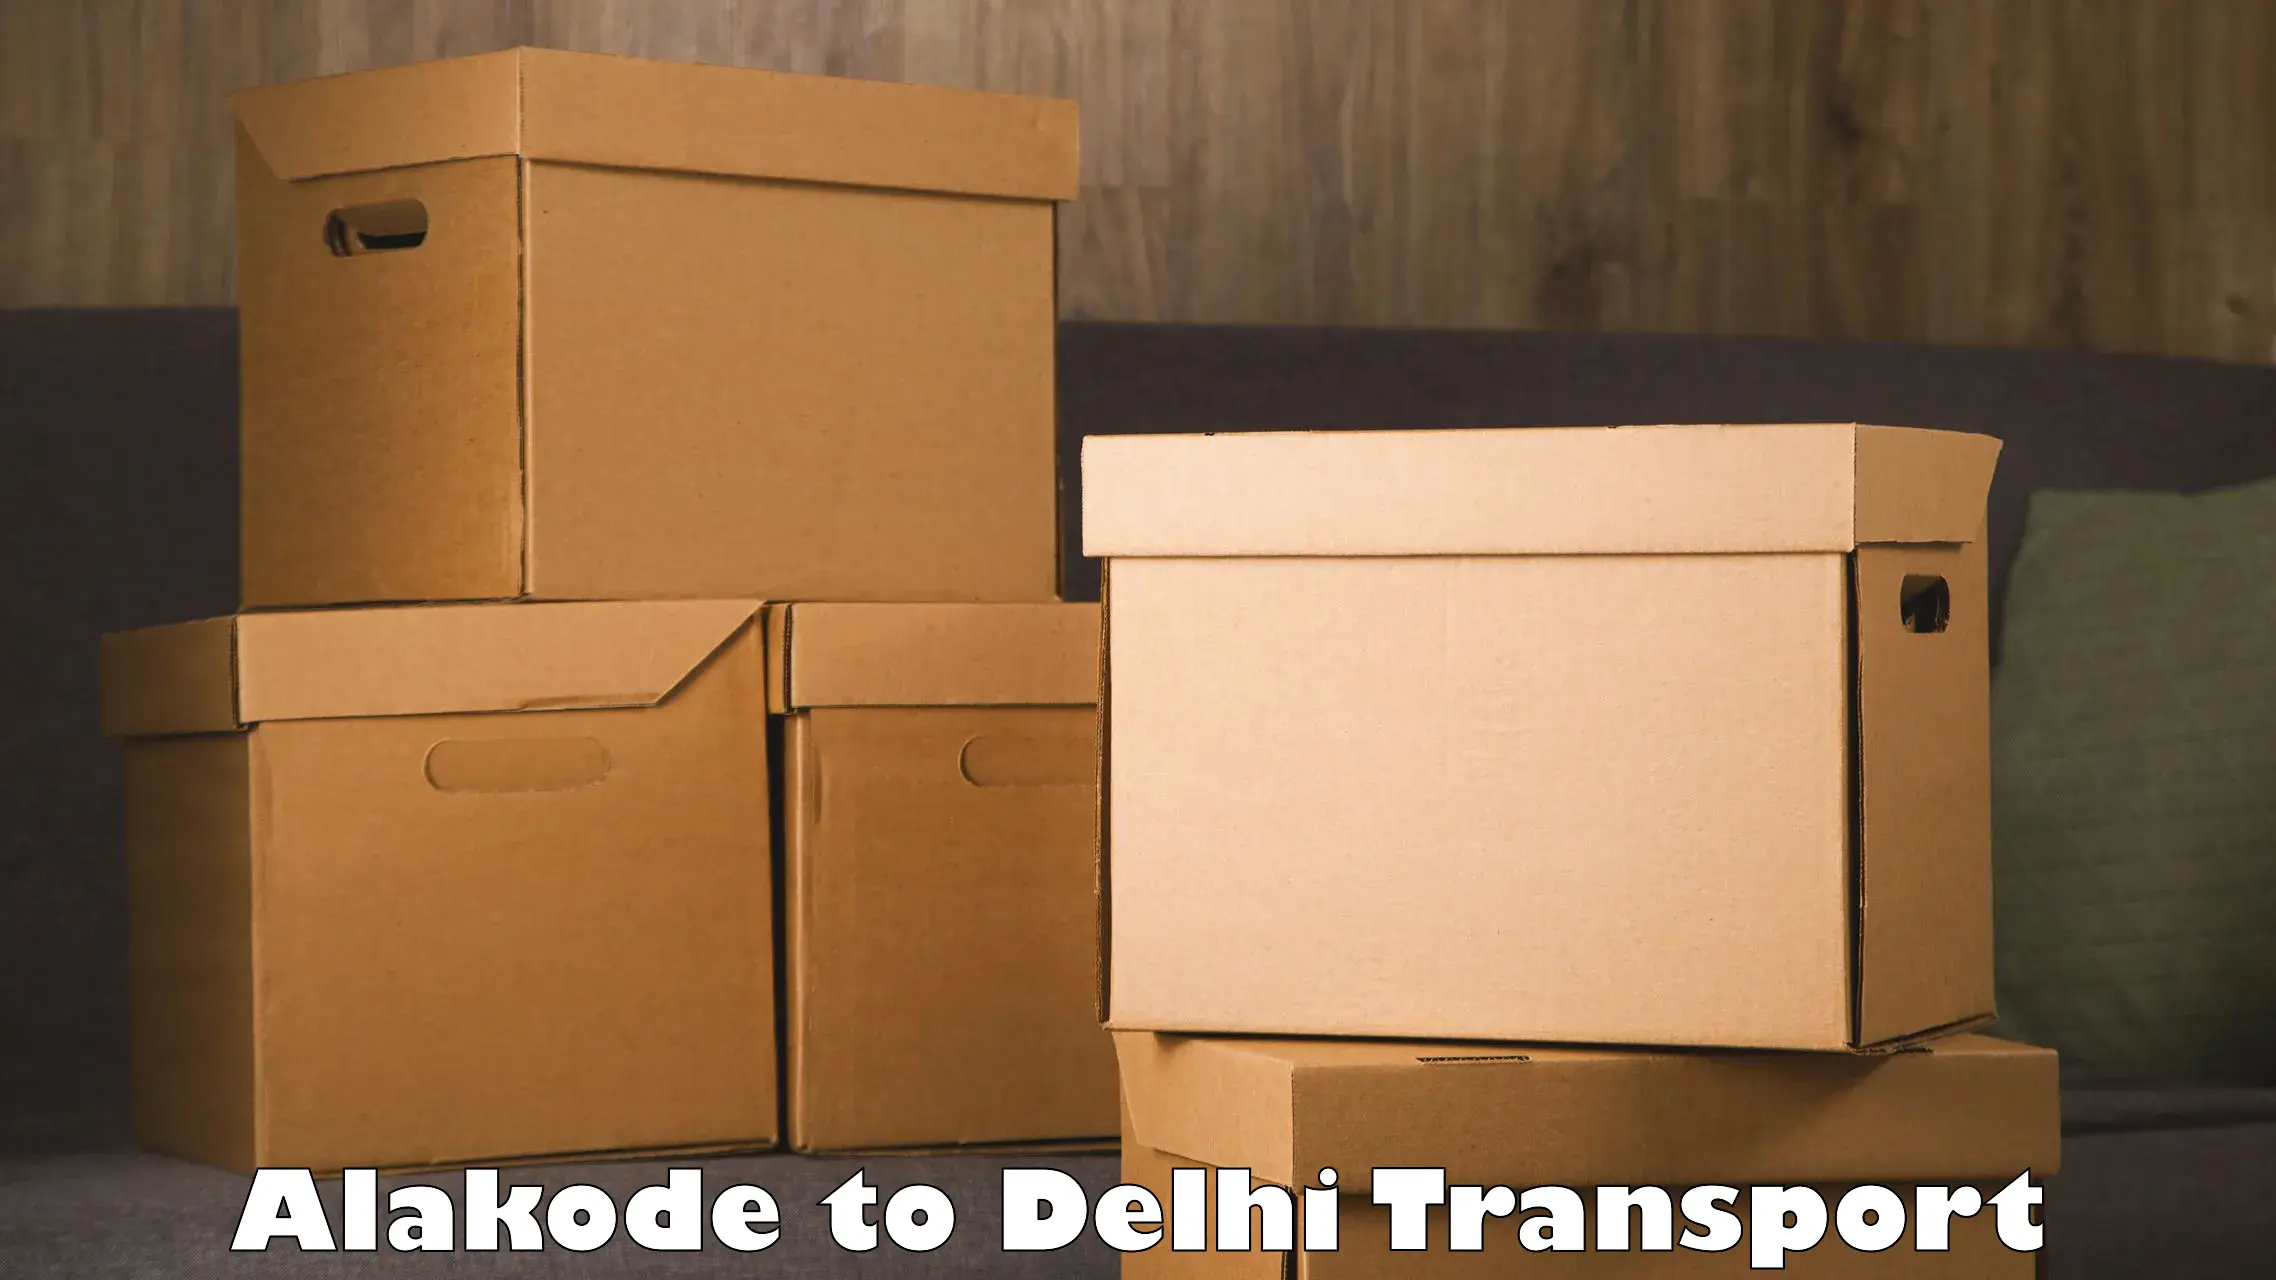 Pick up transport service Alakode to Krishna Nagar